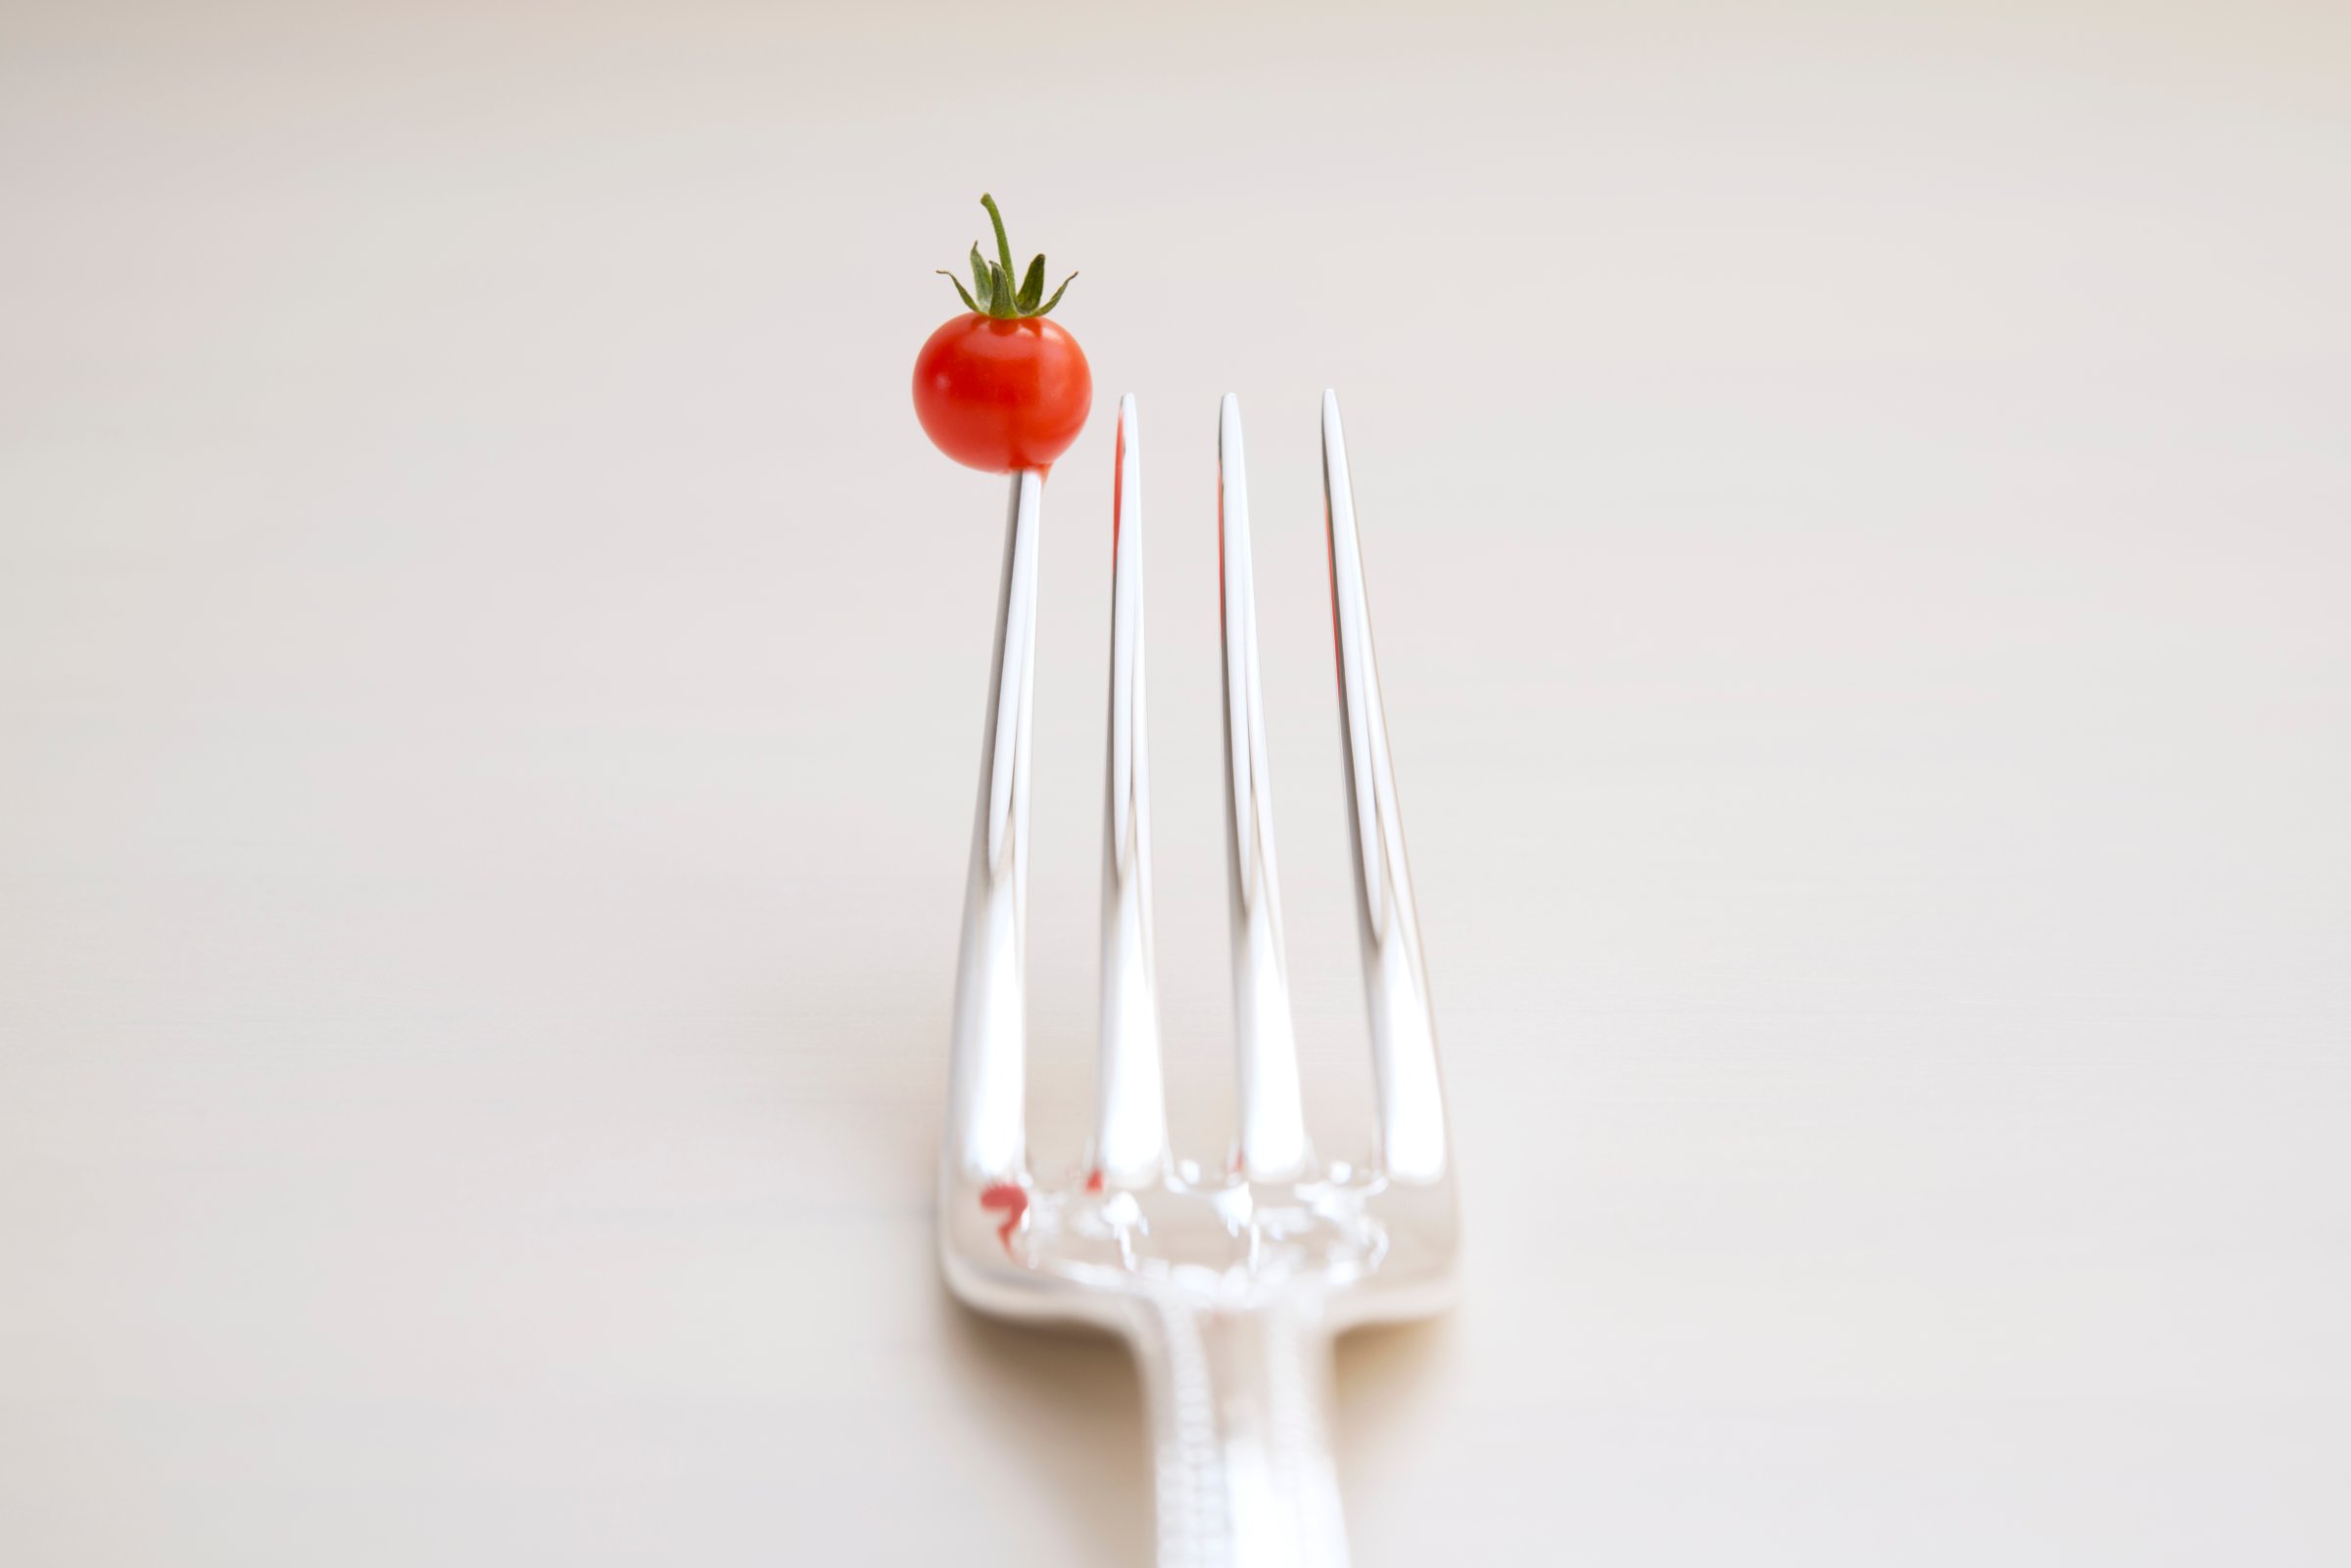 Micro tomato on fork point